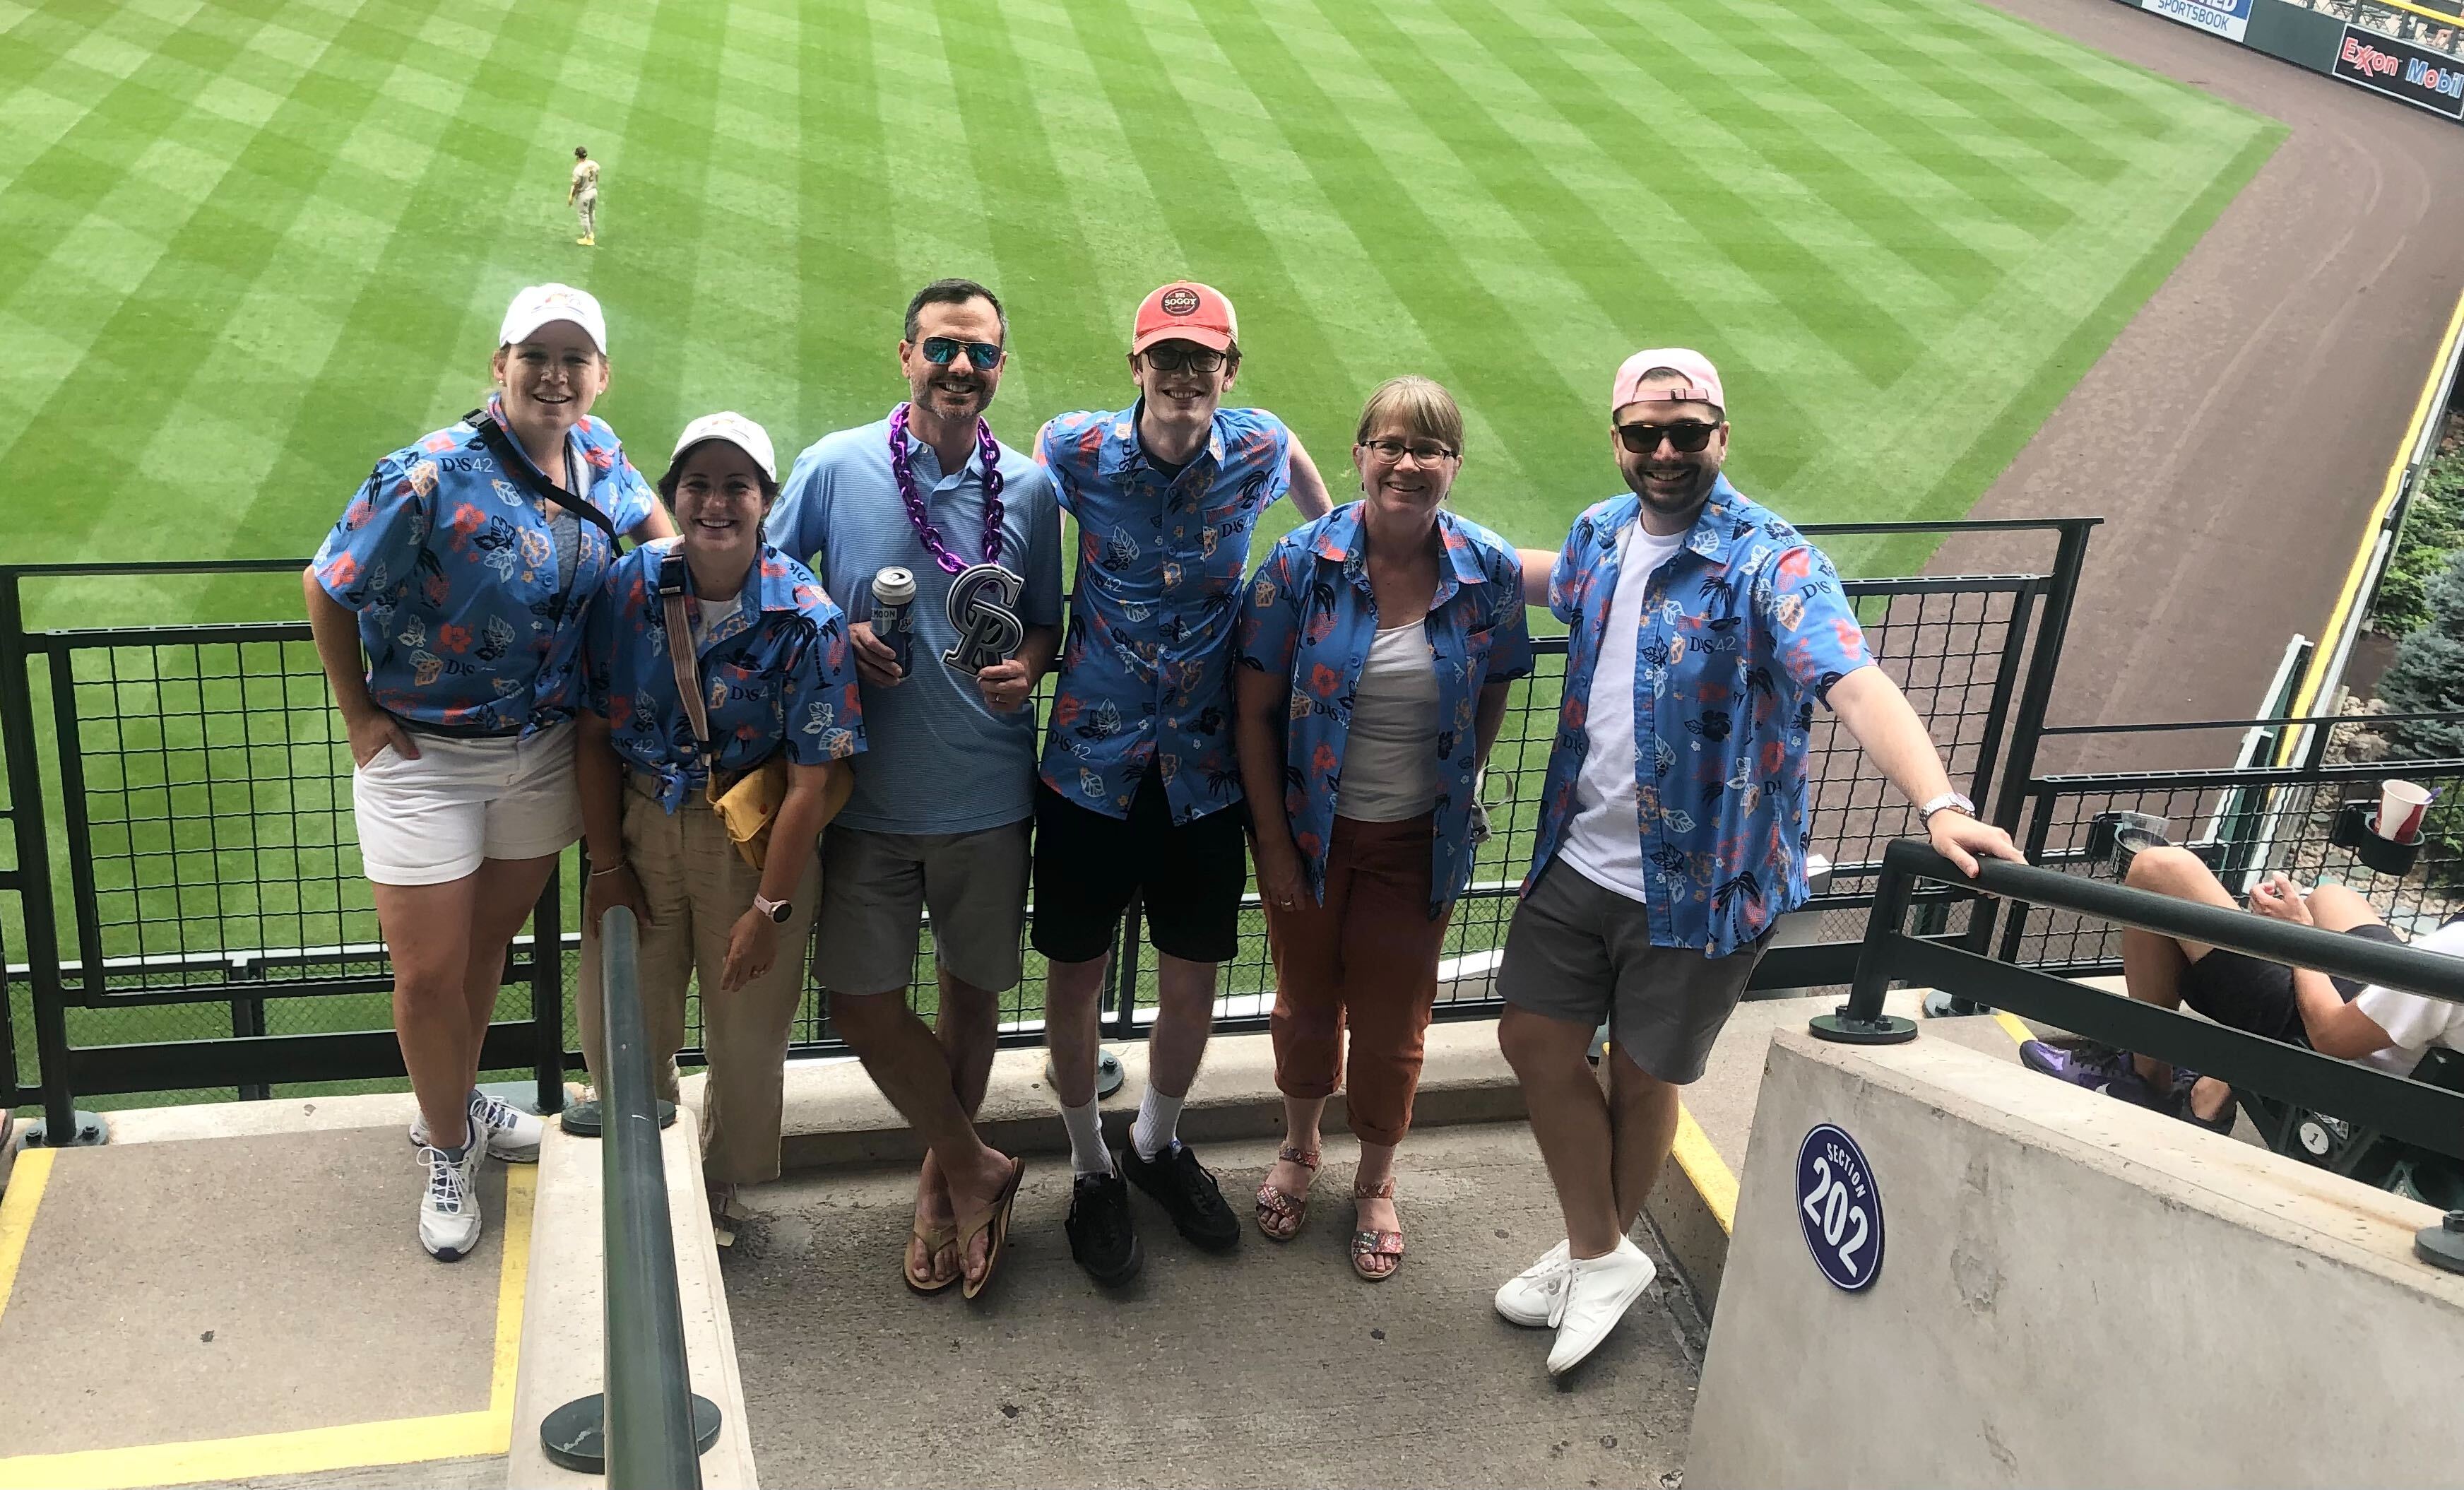 The DAS42 team attends a baseball game in matching Hawaiian shirts.